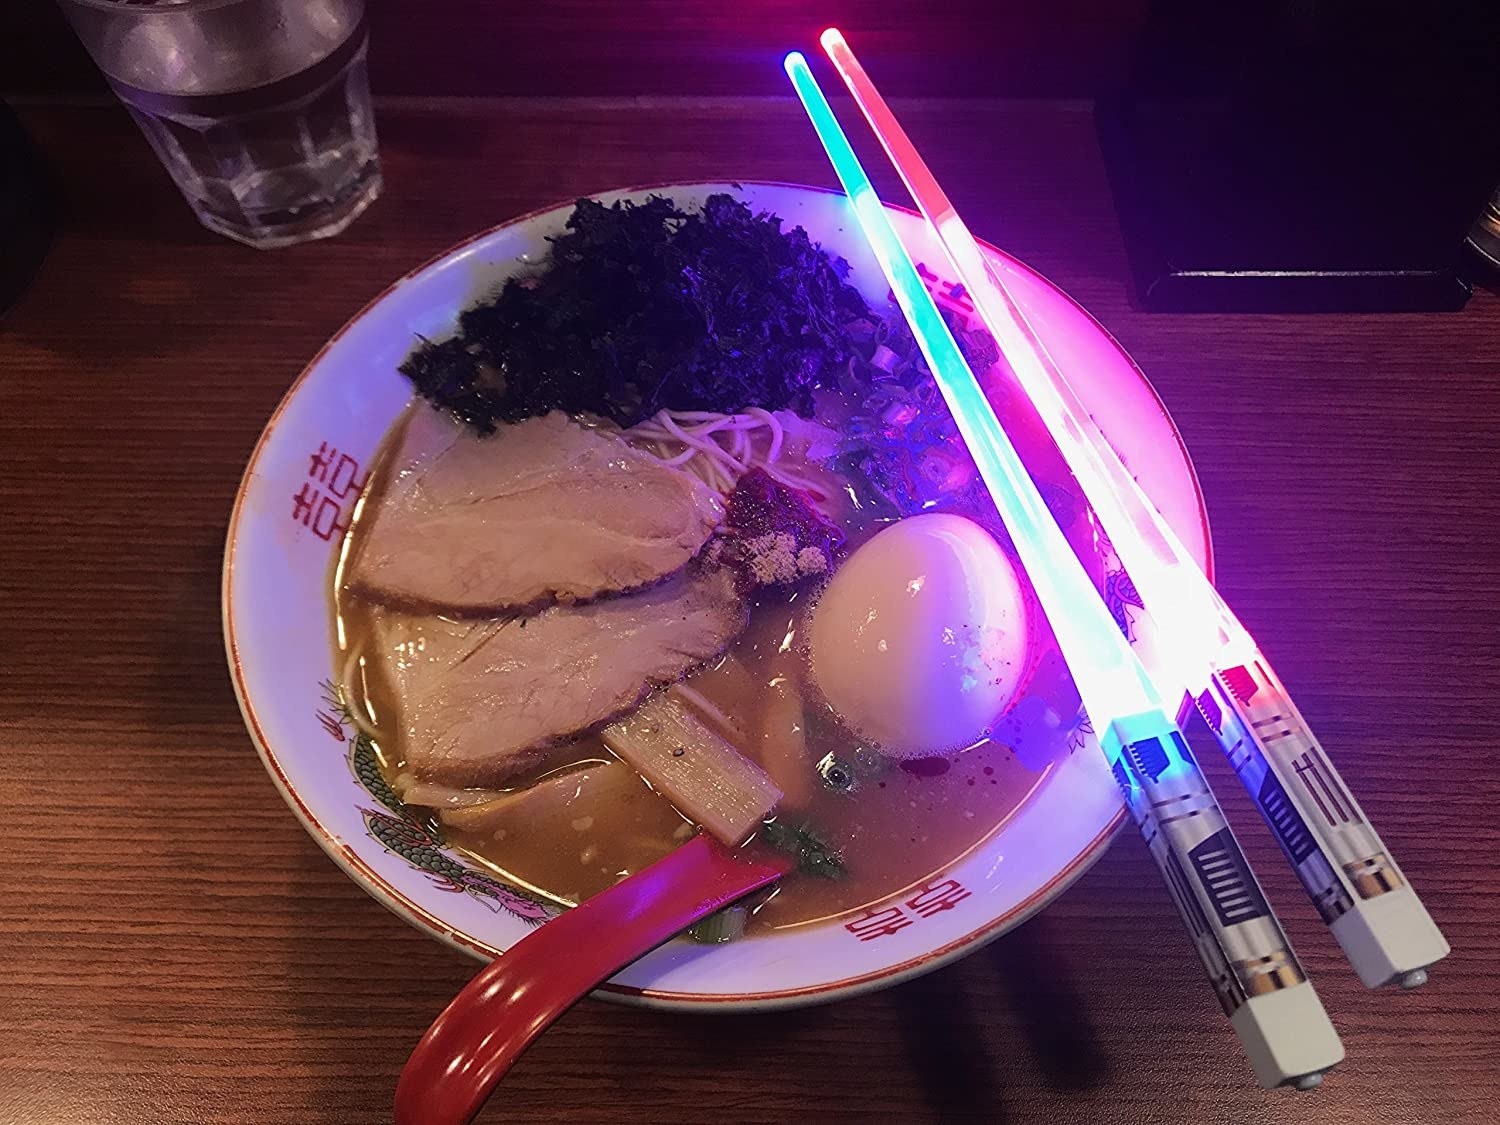 the chopsticks on a bowl